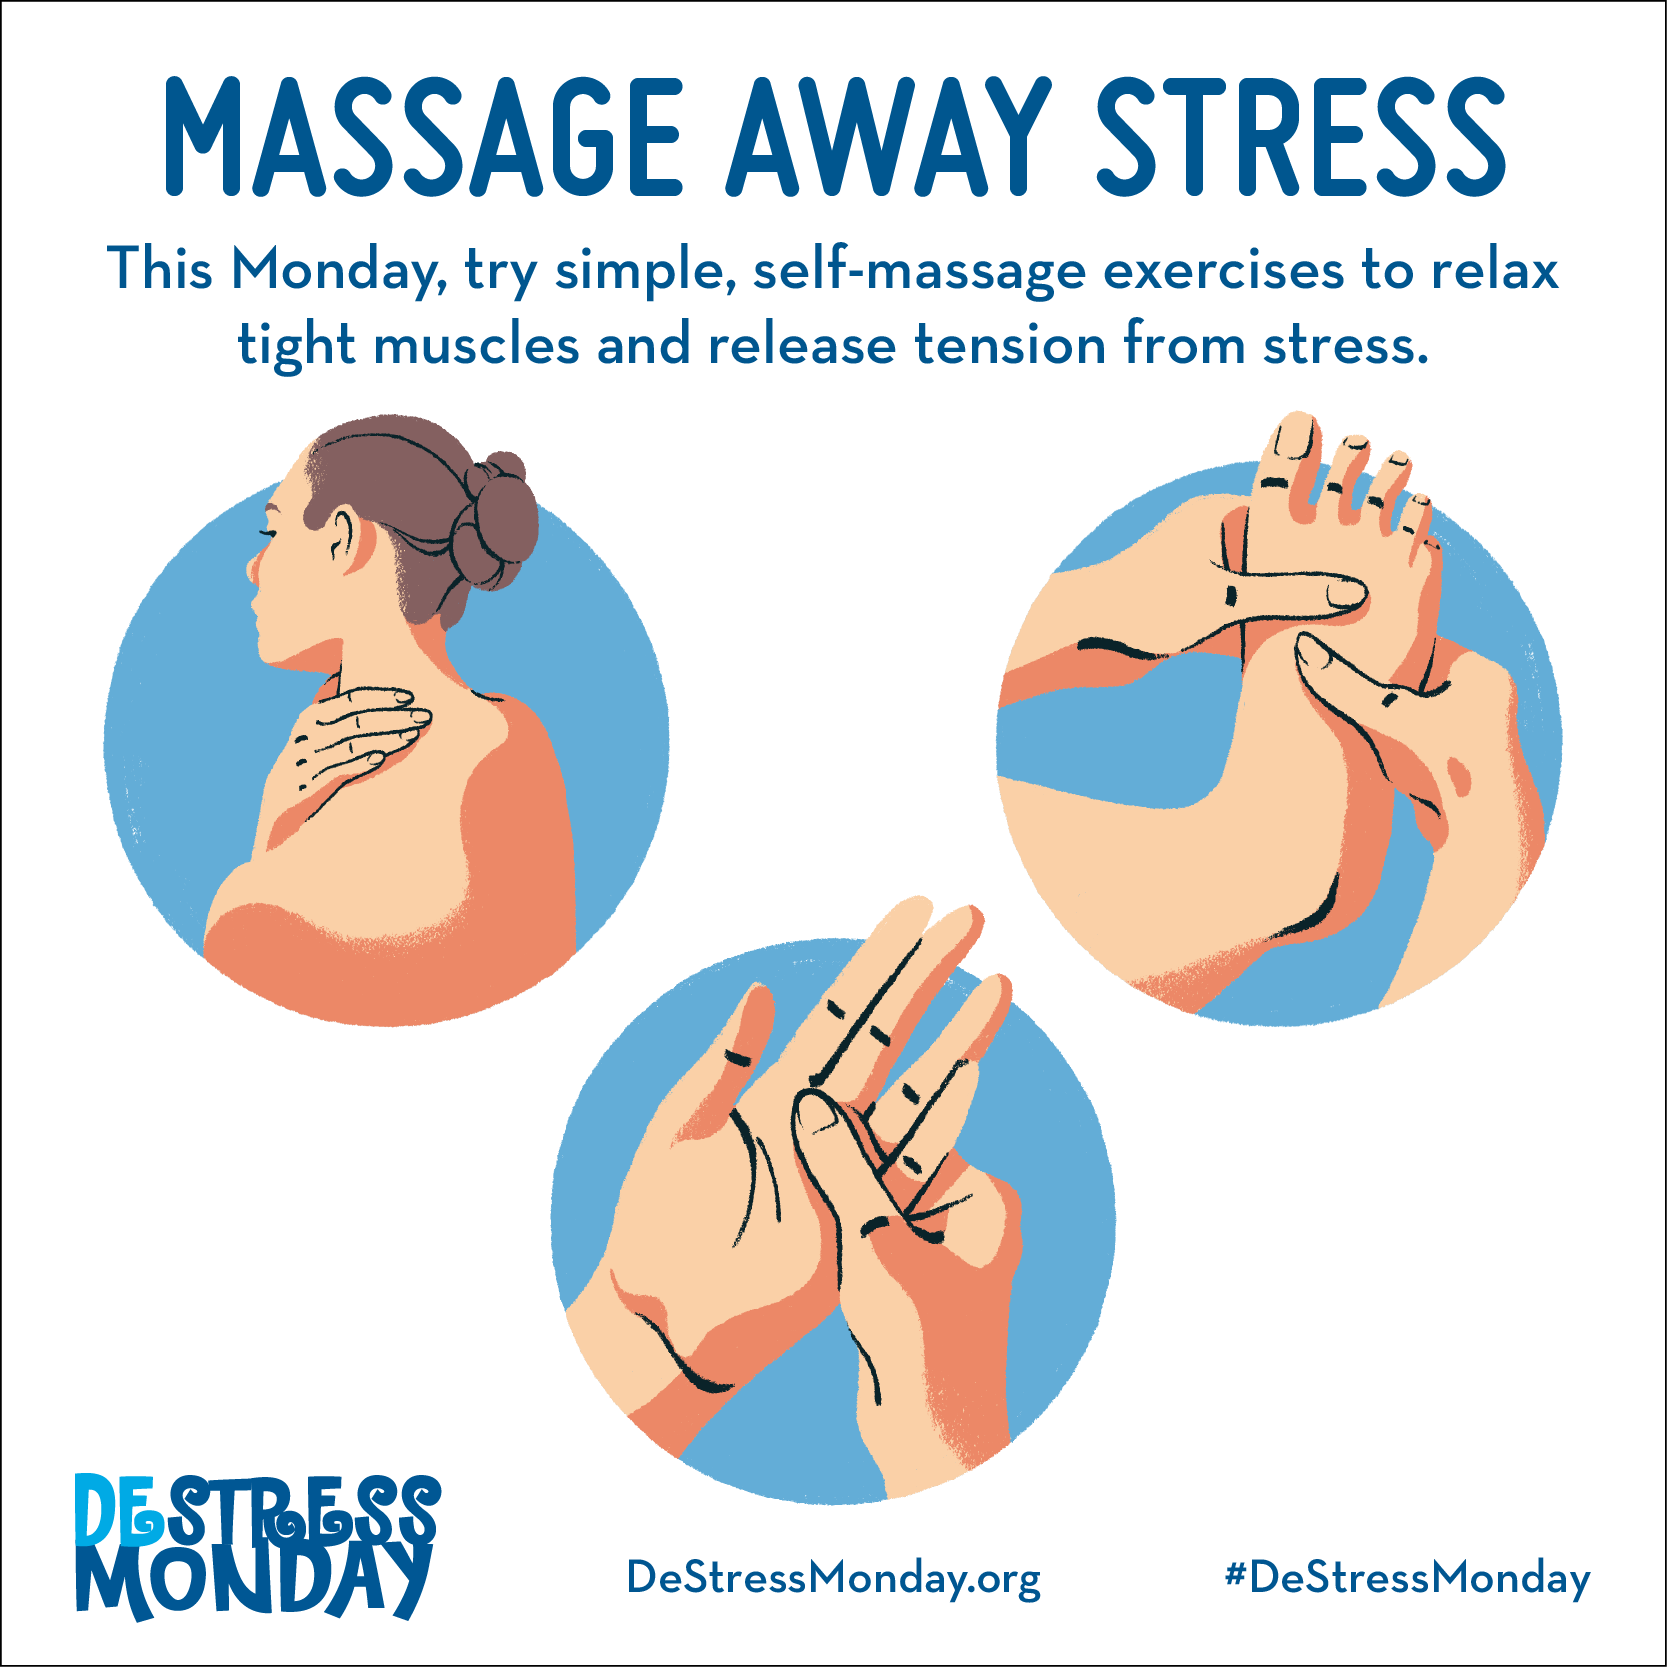 https://www.mondaycampaigns.org/wp-content/uploads/2020/05/destress-monday-graphic-massage-away-stress.png